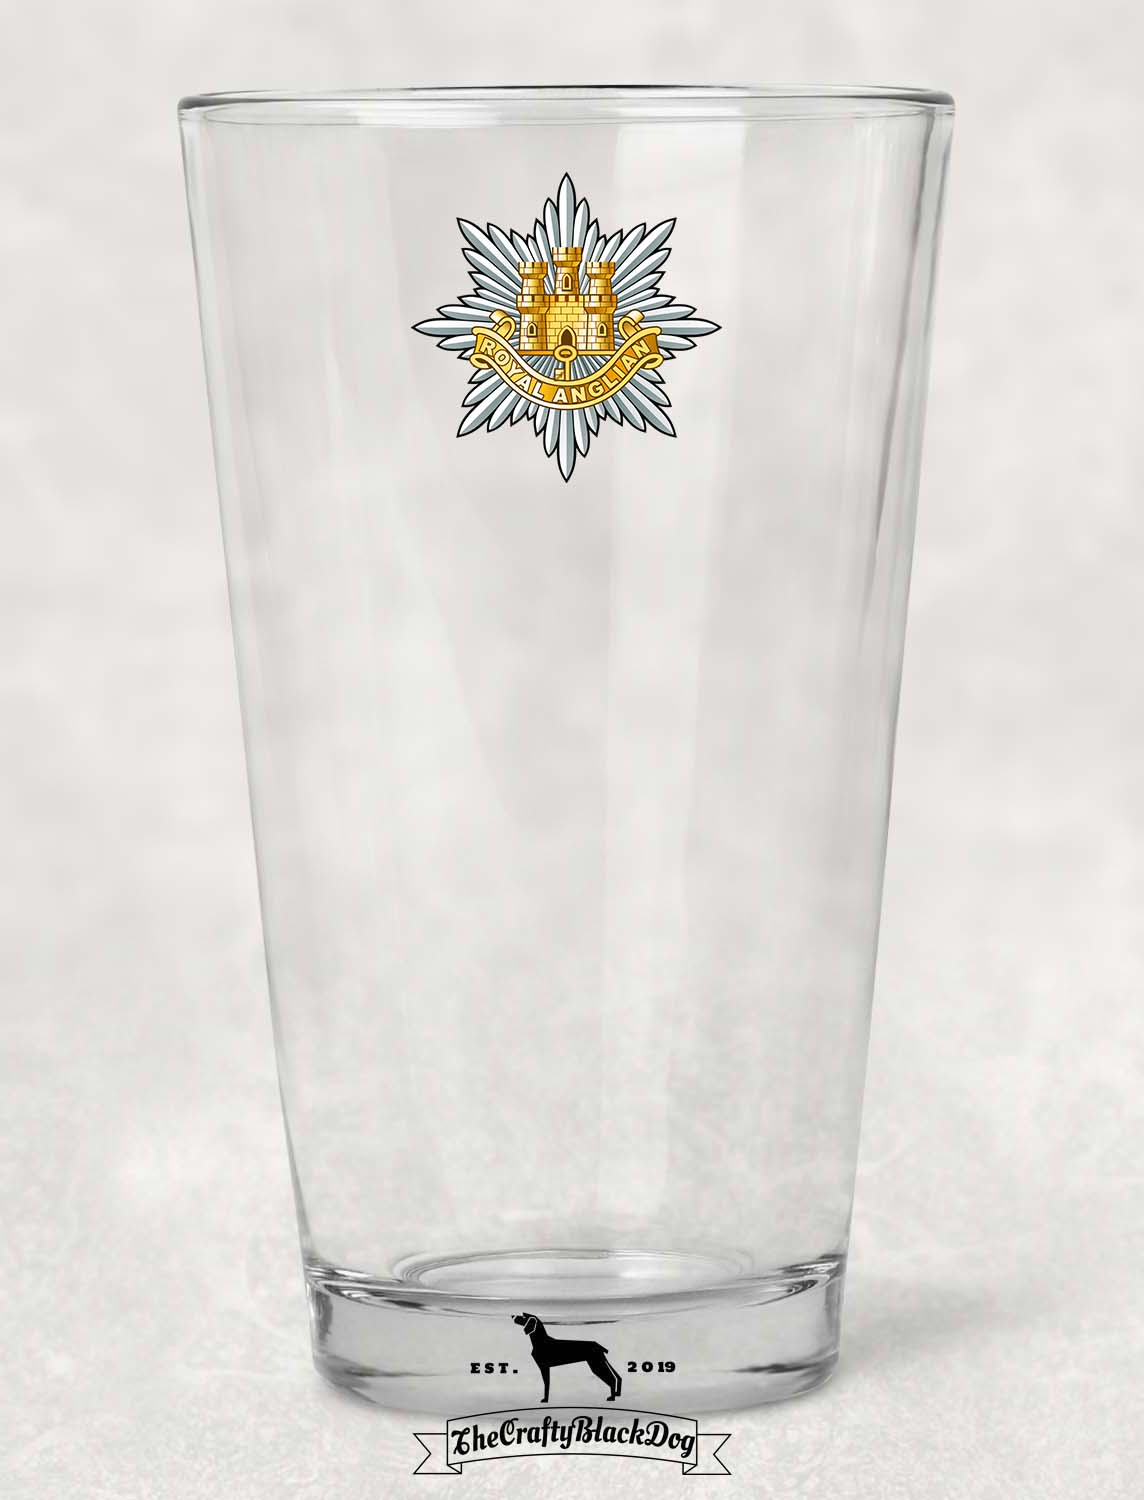 Royal Anglian Regiment - Pint Glass